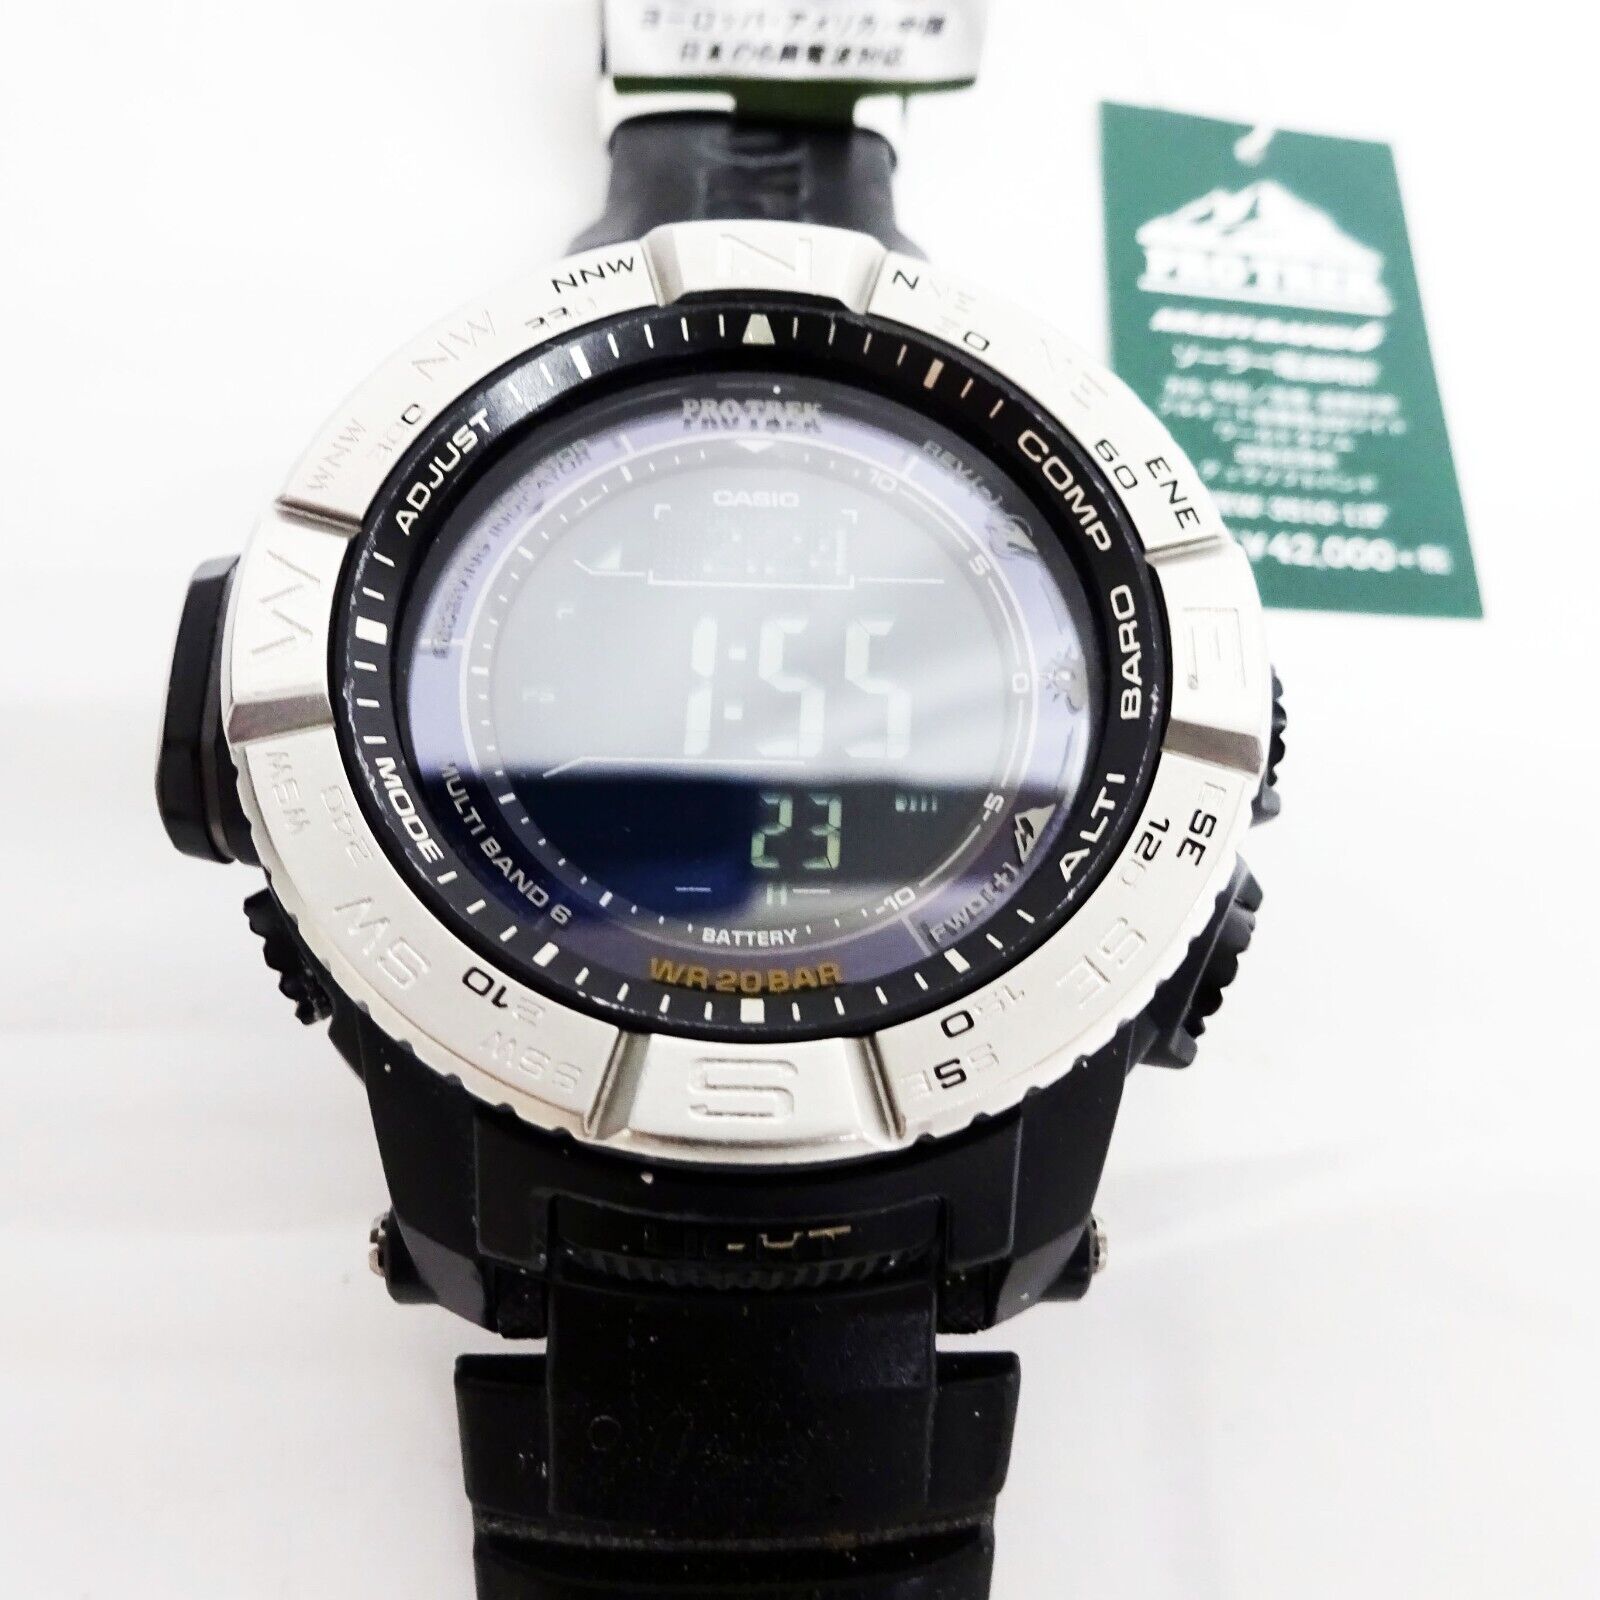 Casio Pro Trek PRW-3510-1JF Wrist Watch for Men for sale online | eBay